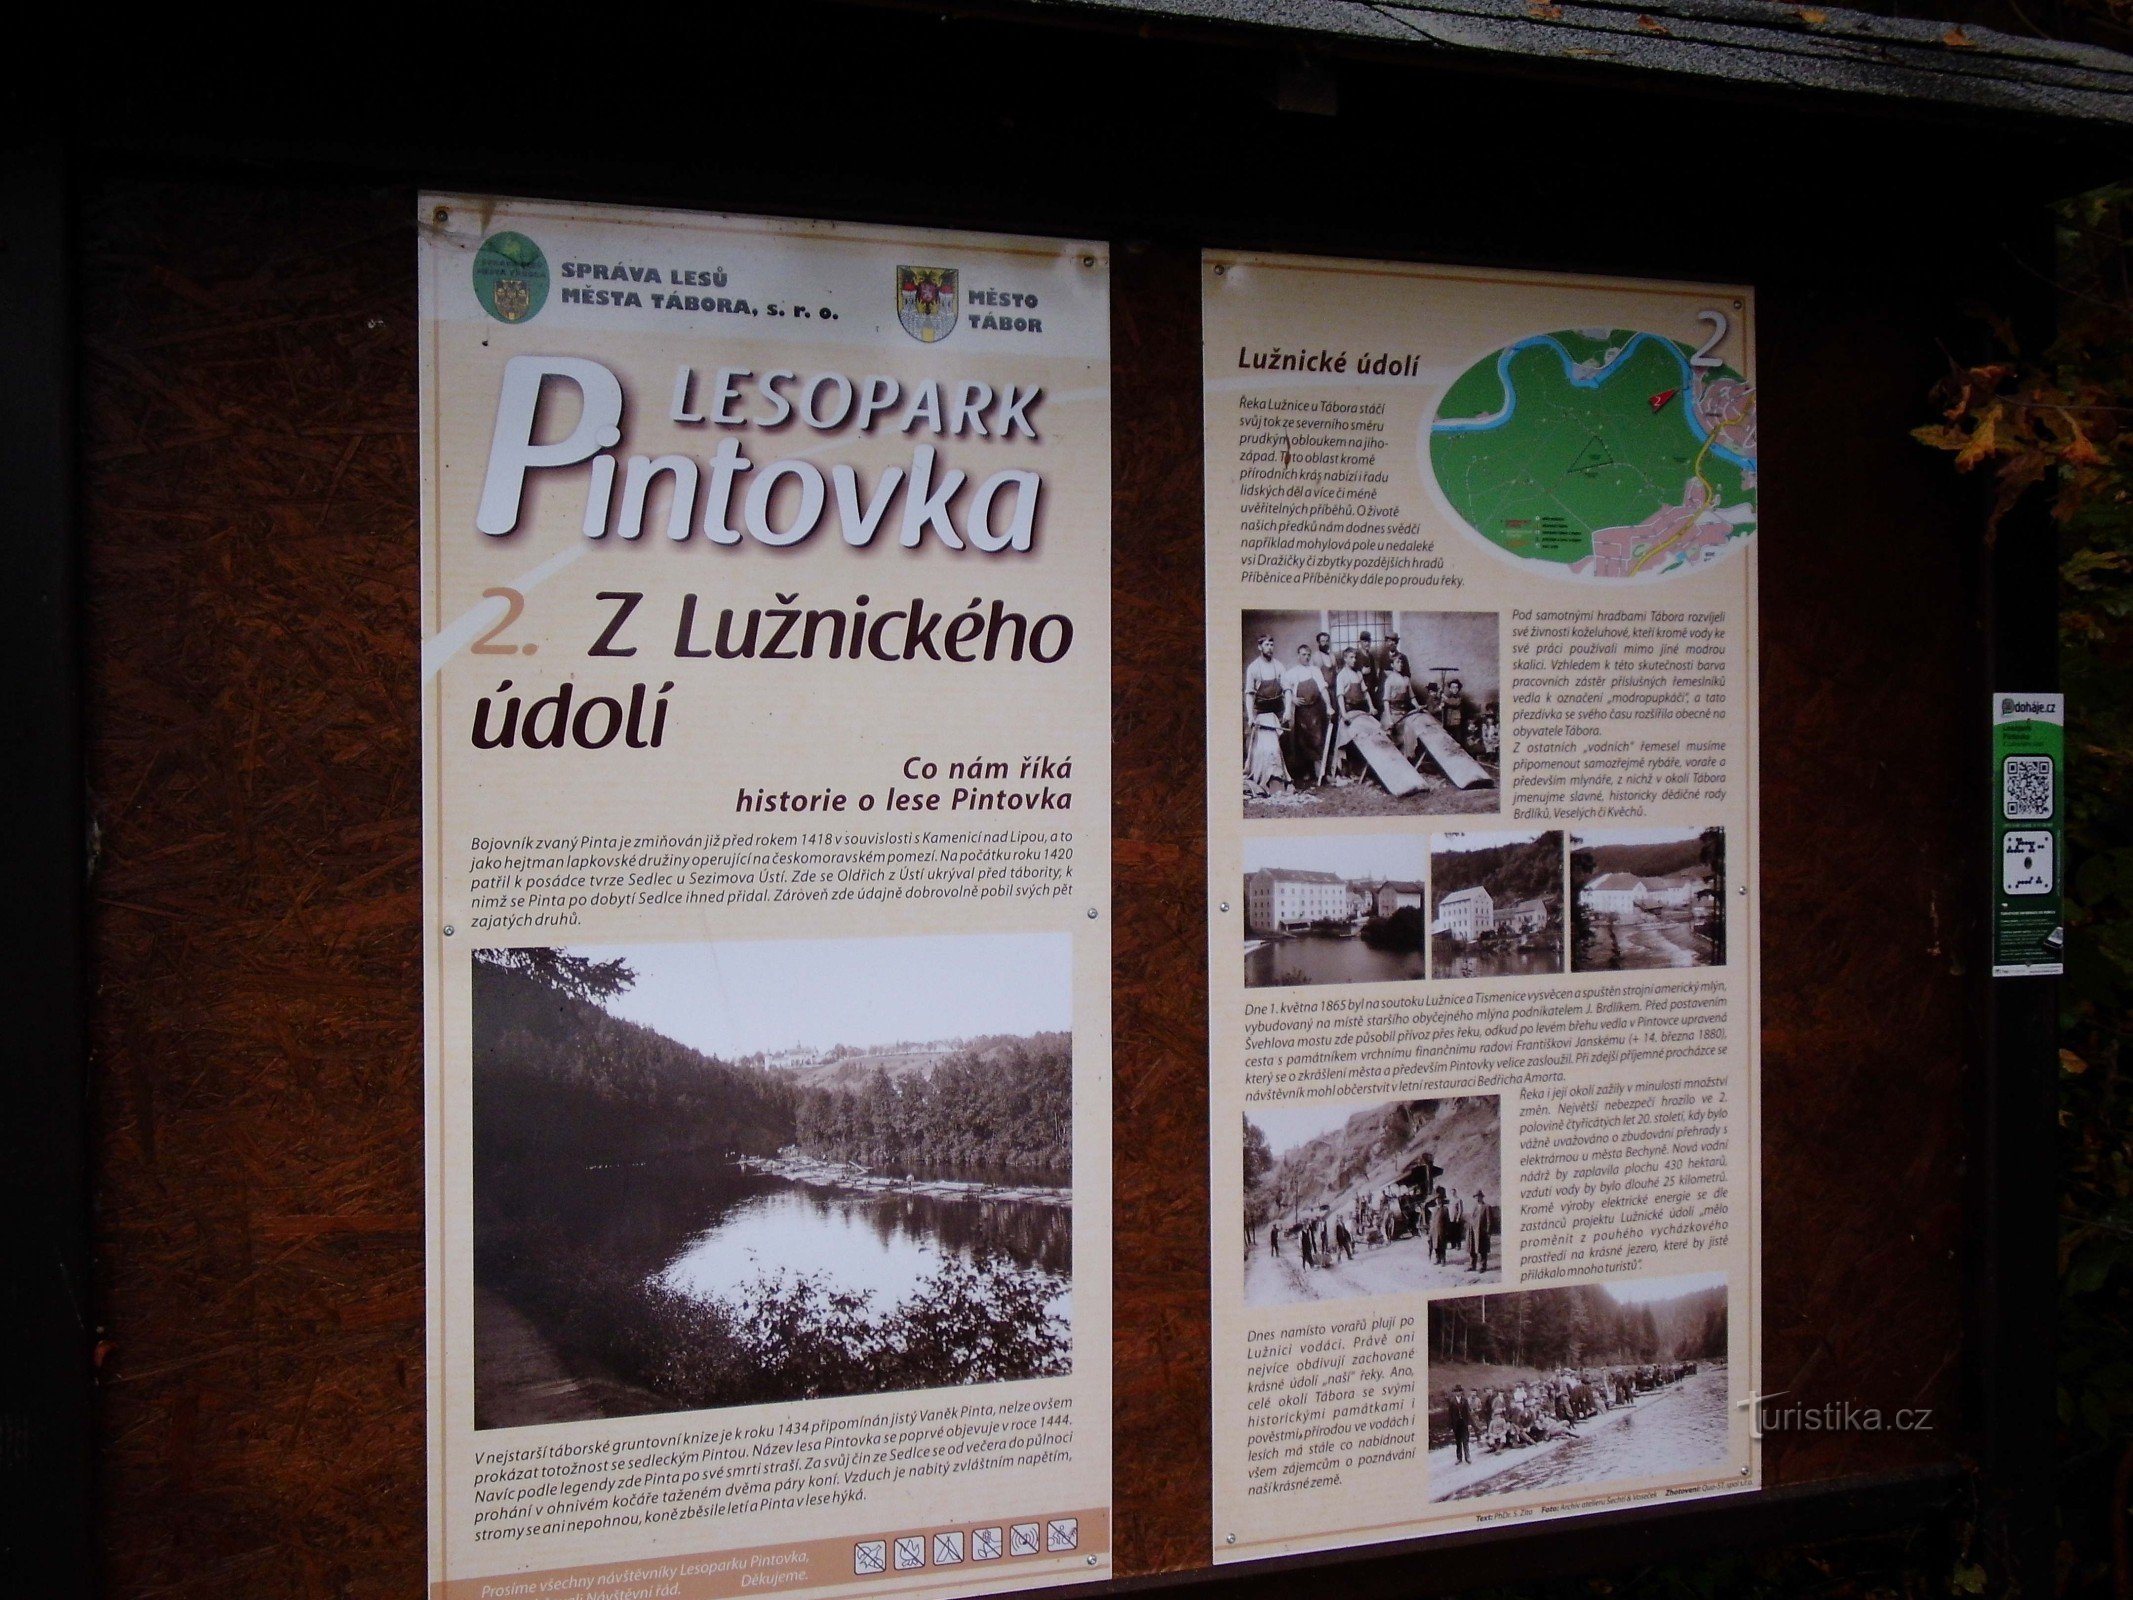 Da Tábor a Bechyně lungo la riva del Lužnice o più avanti lungo la strada rossa